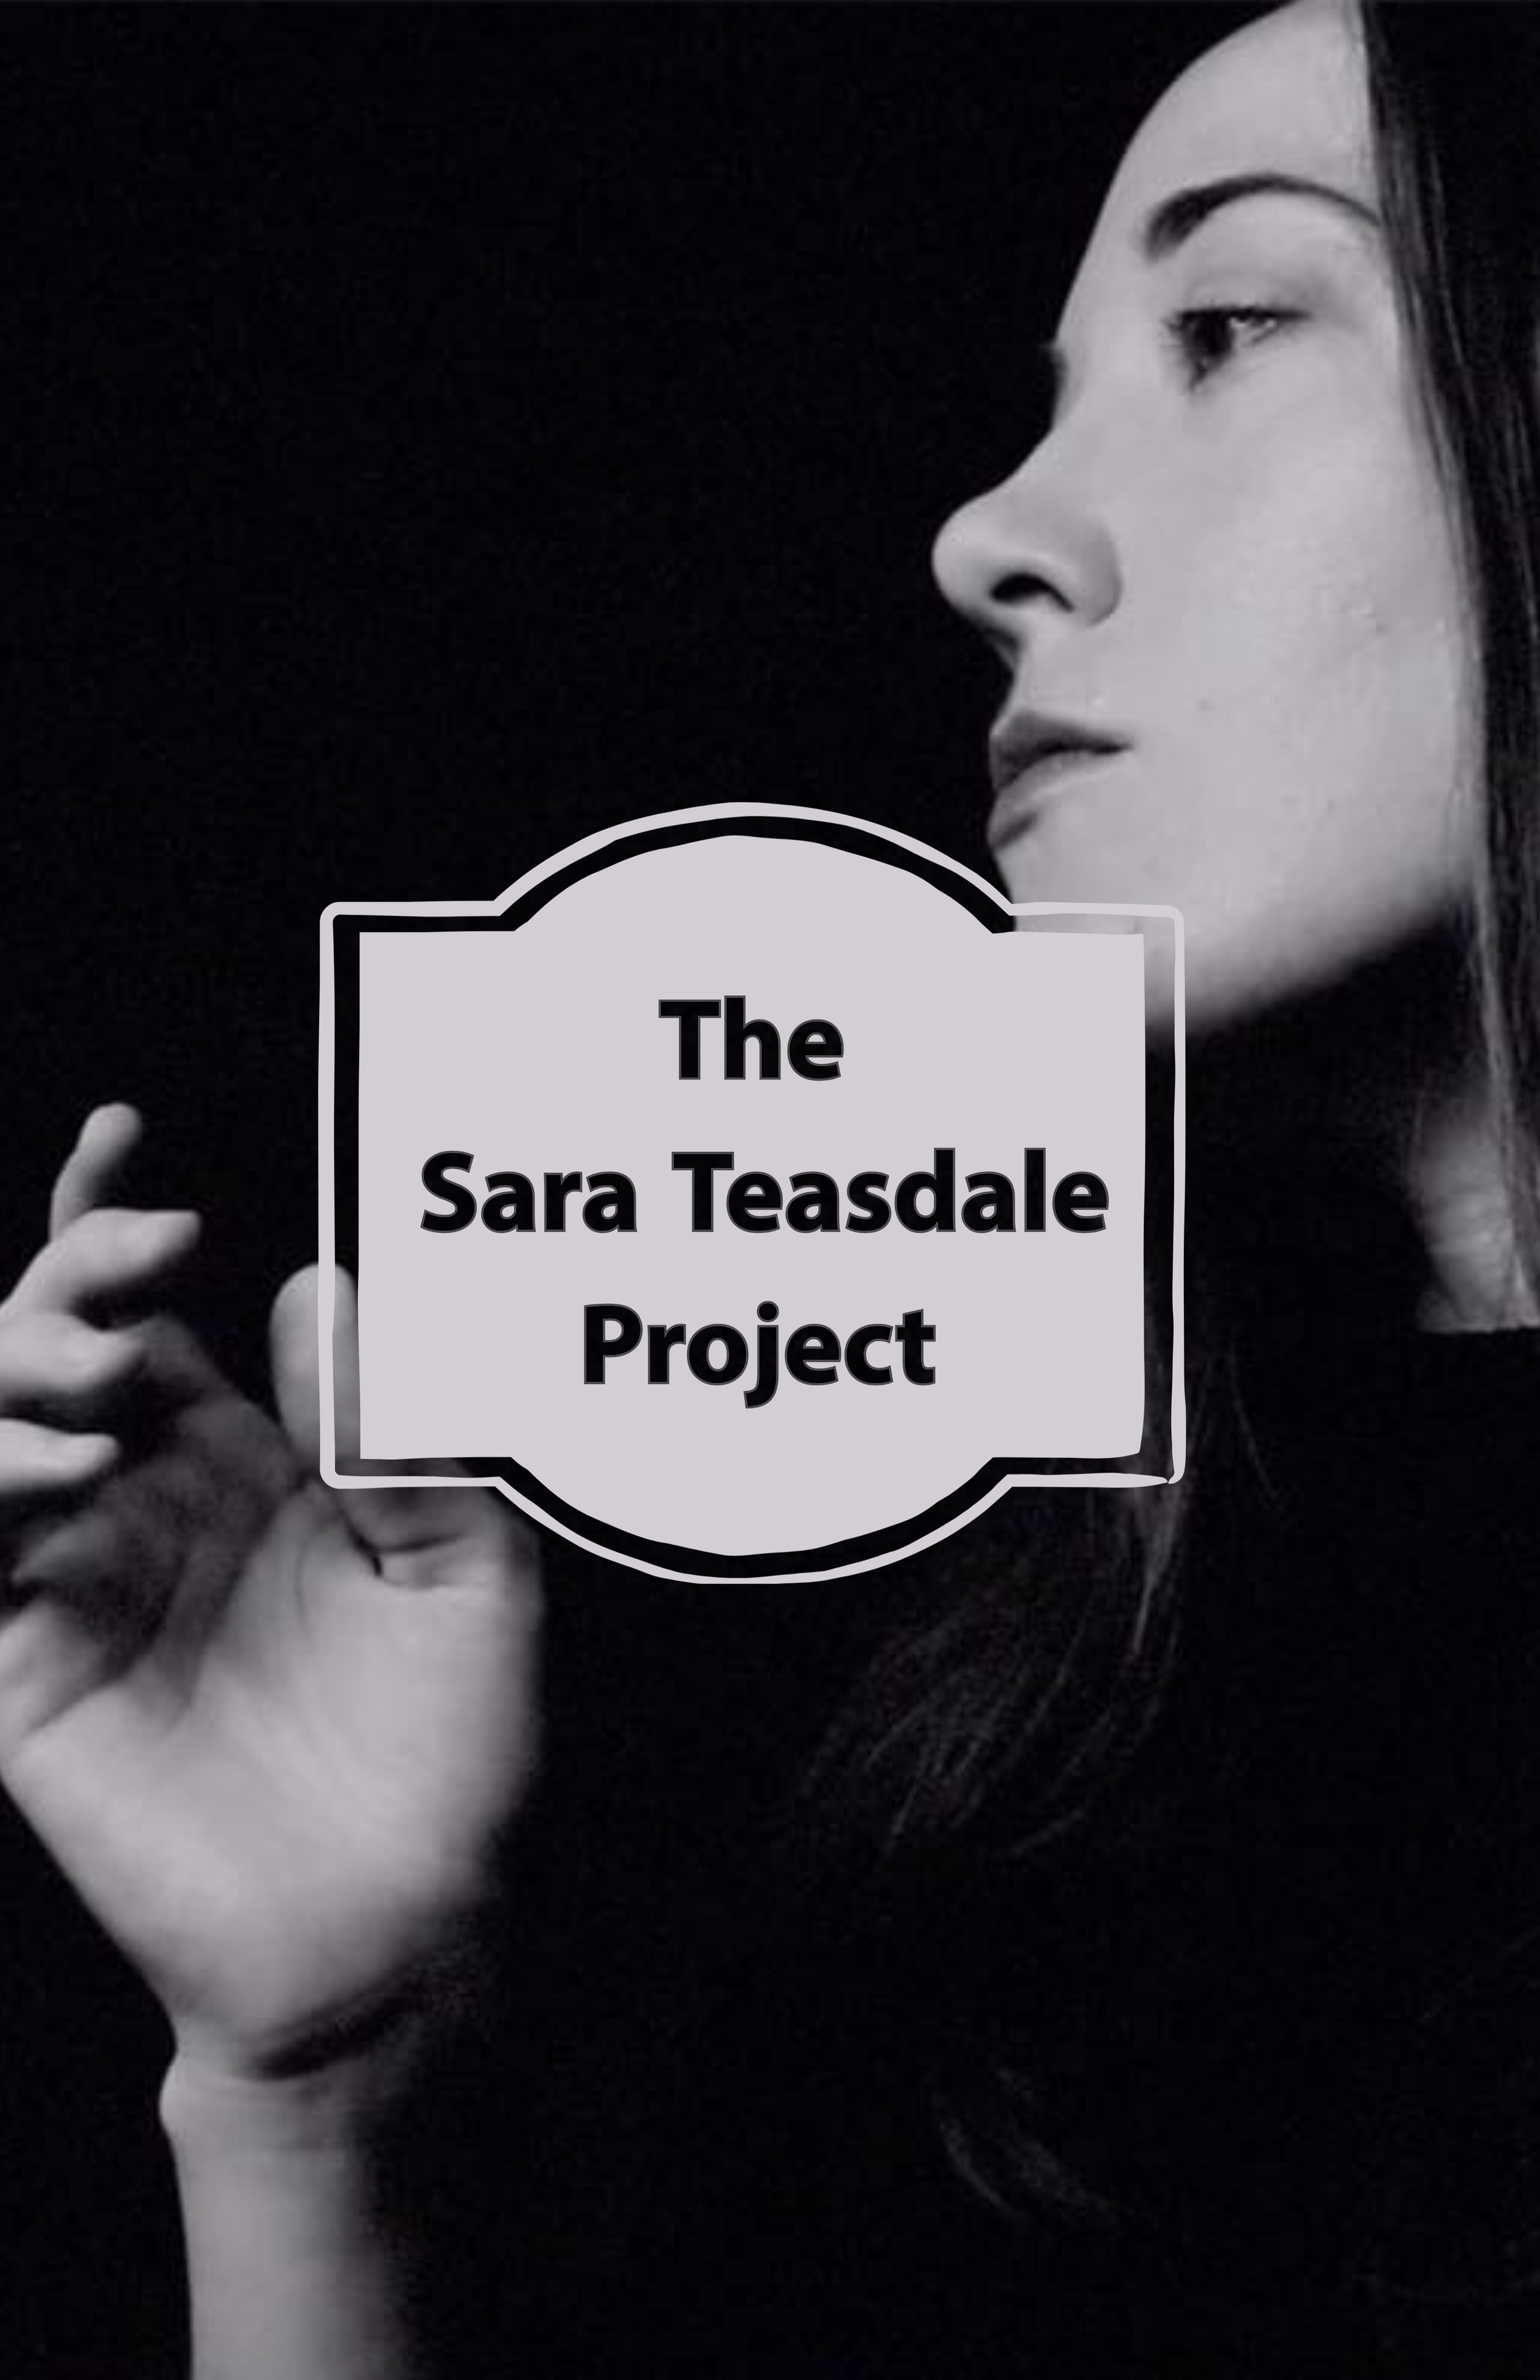 The Sara Teasdale Project